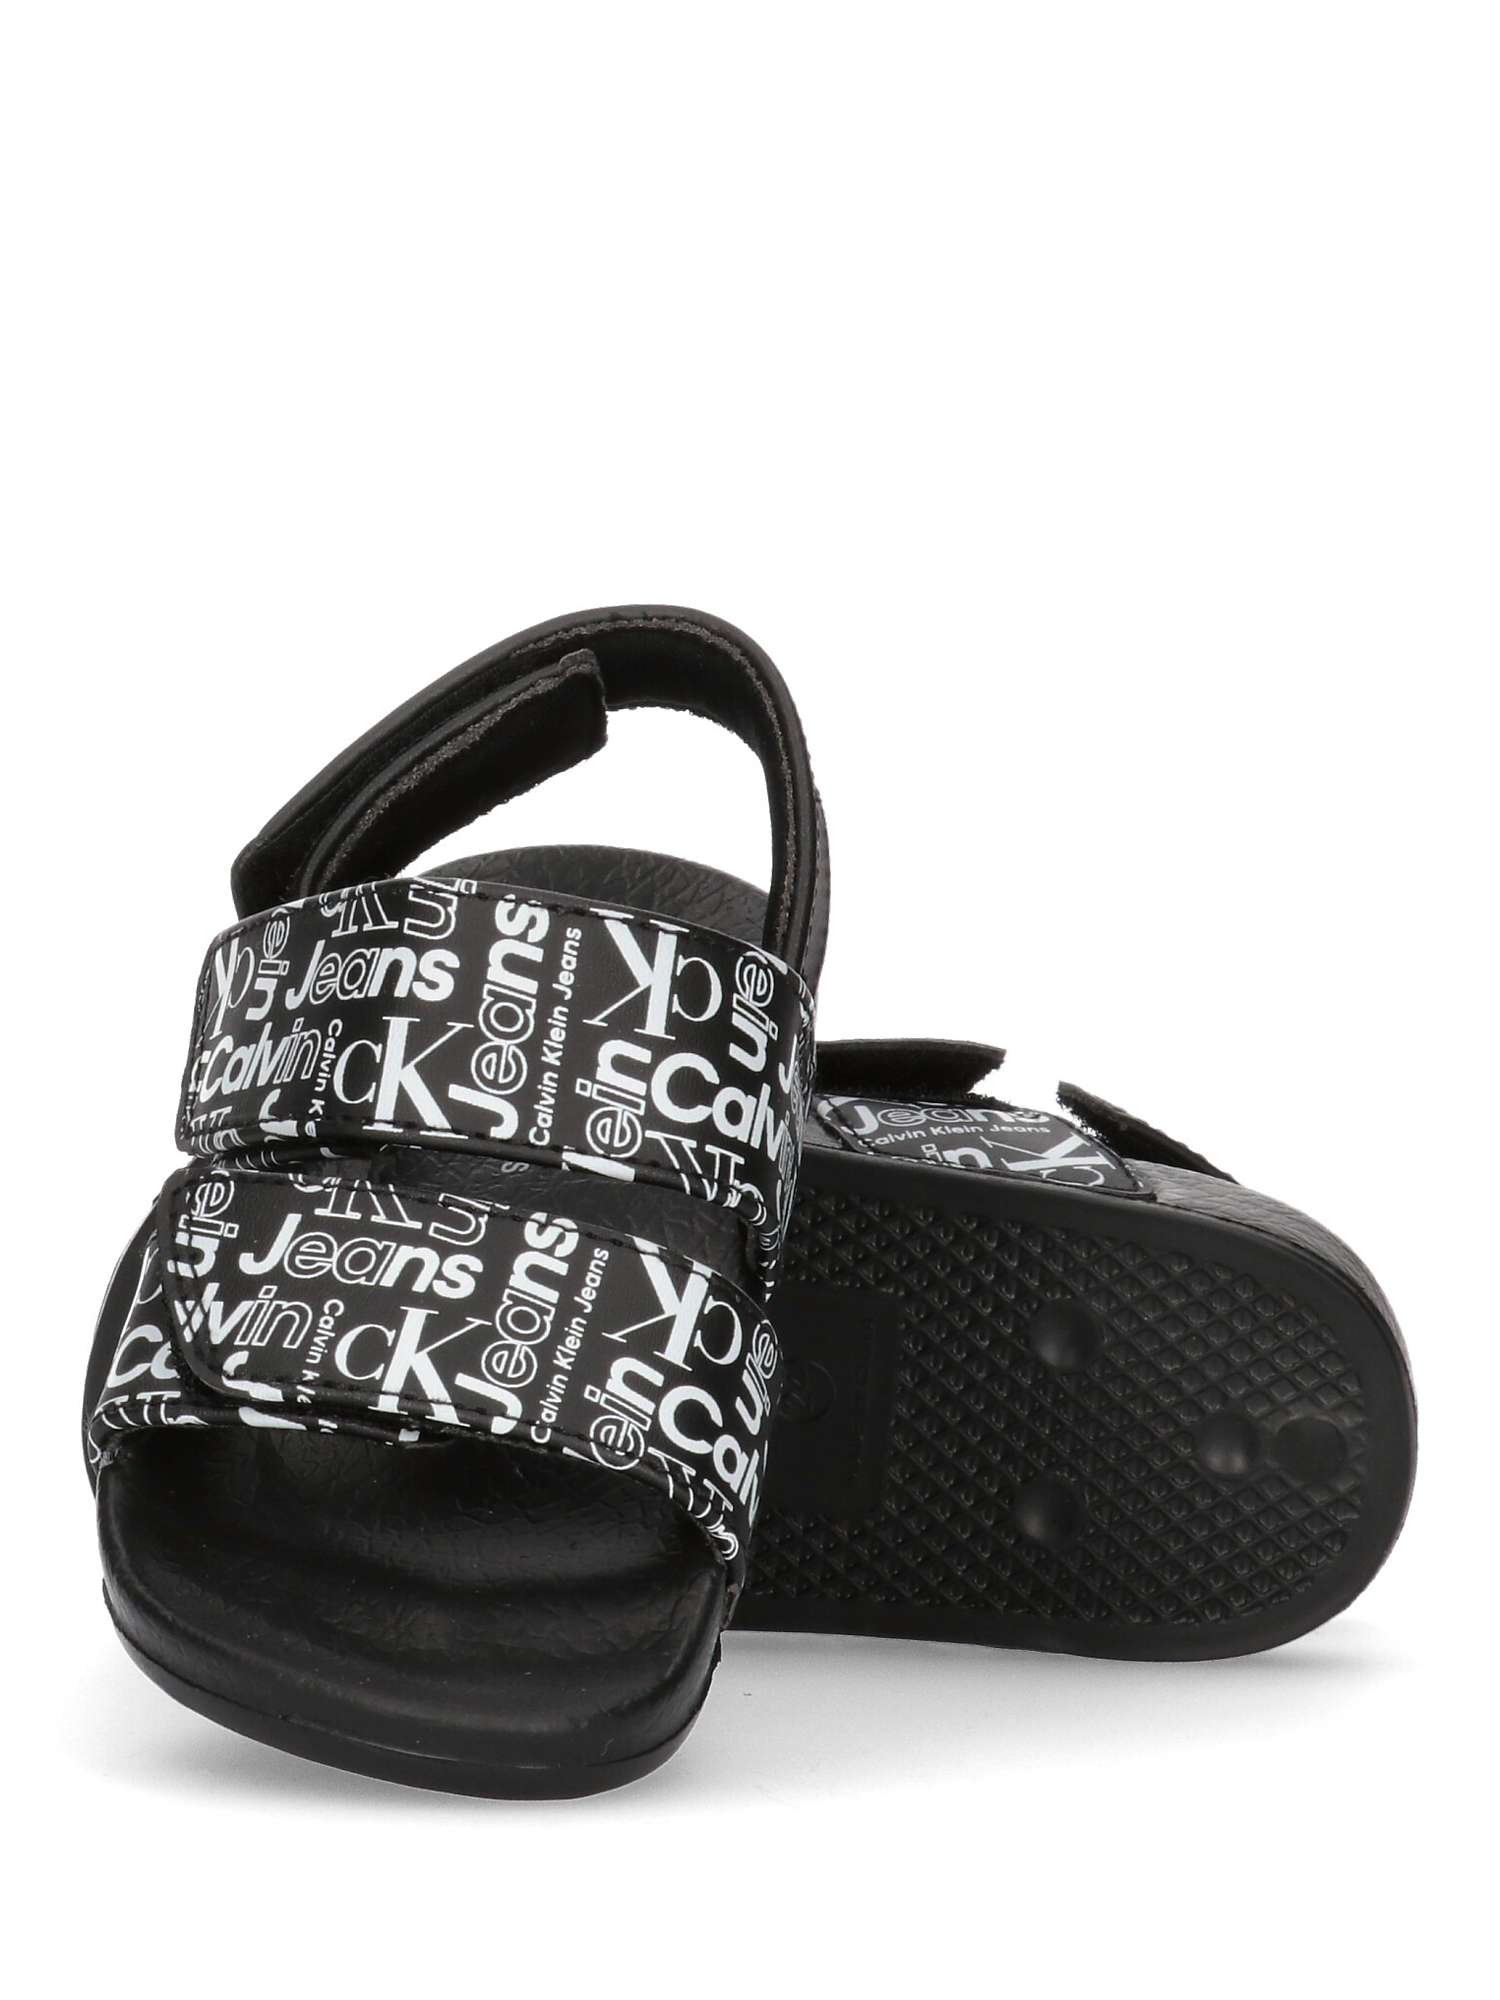 Buy Calvin Klein Kids' Logo Riptape Strap Sandals, Black/White Online at johnlewis.com